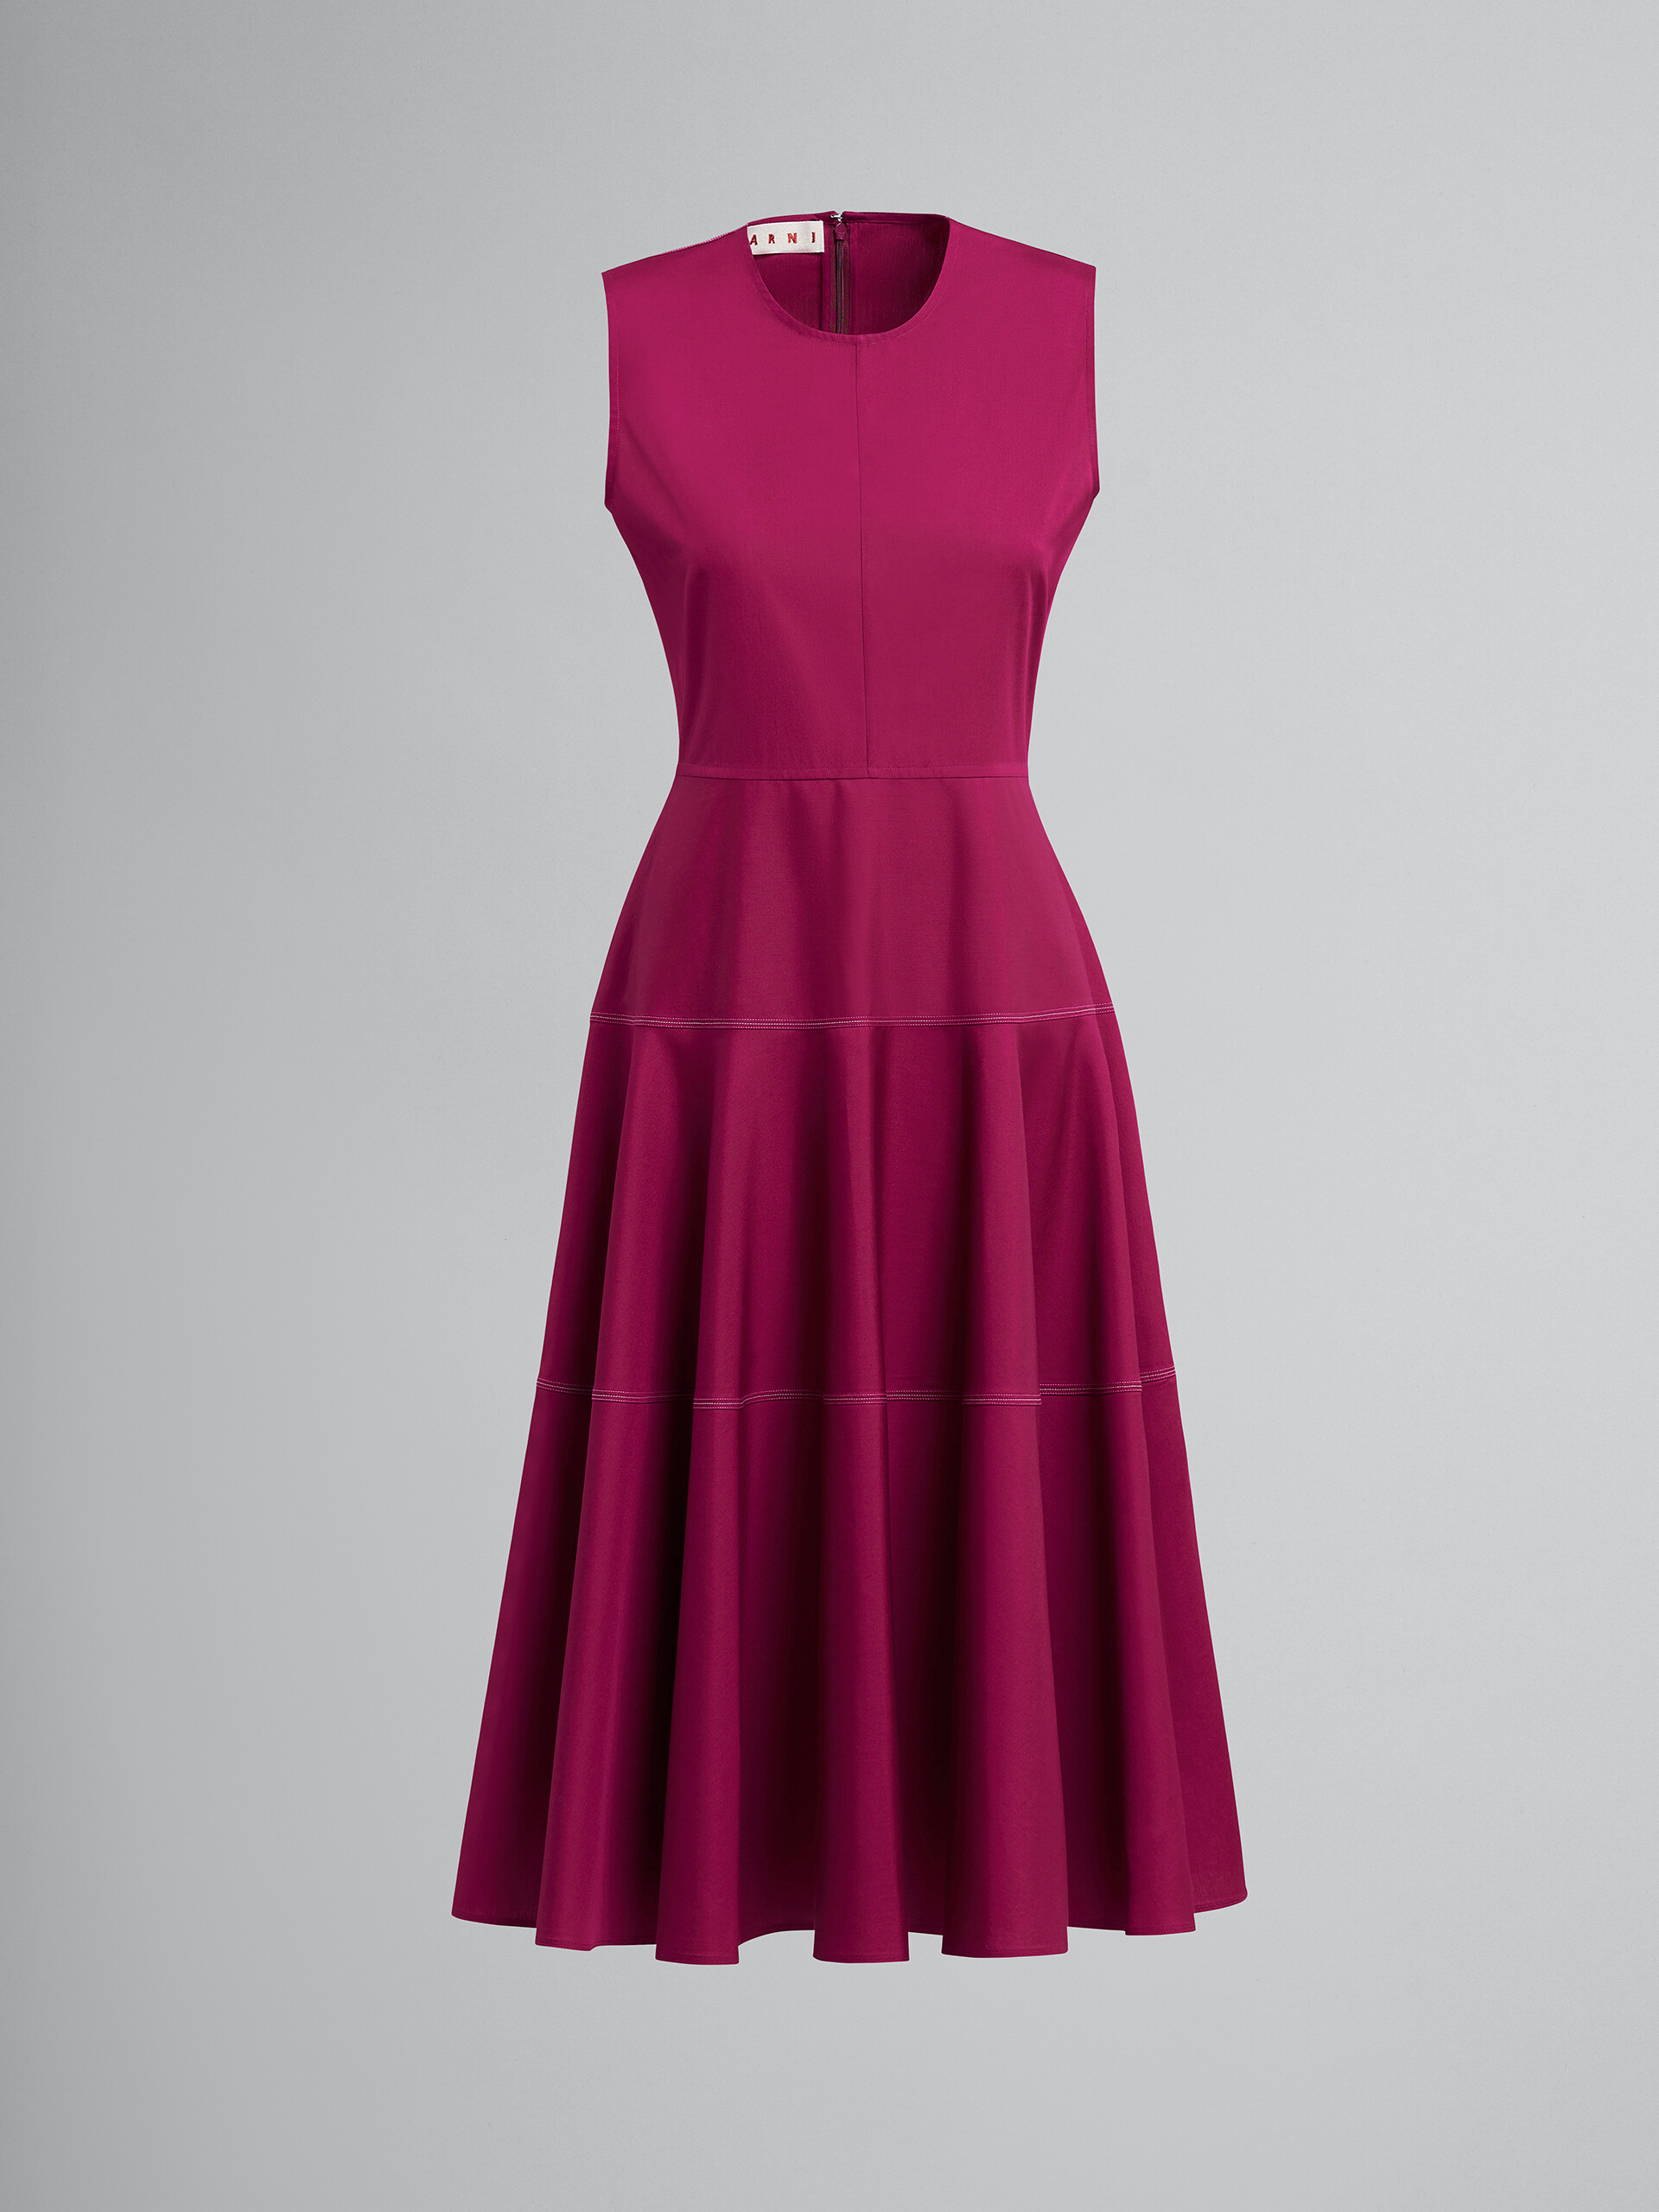 Cotton poplin dress - Dresses - Image 1